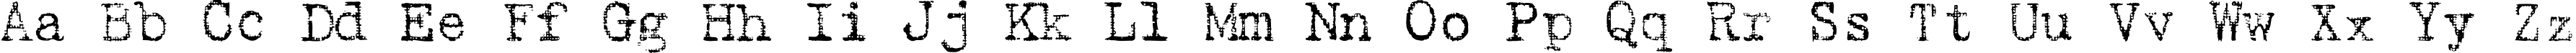 Пример написания английского алфавита шрифтом Typewriter2